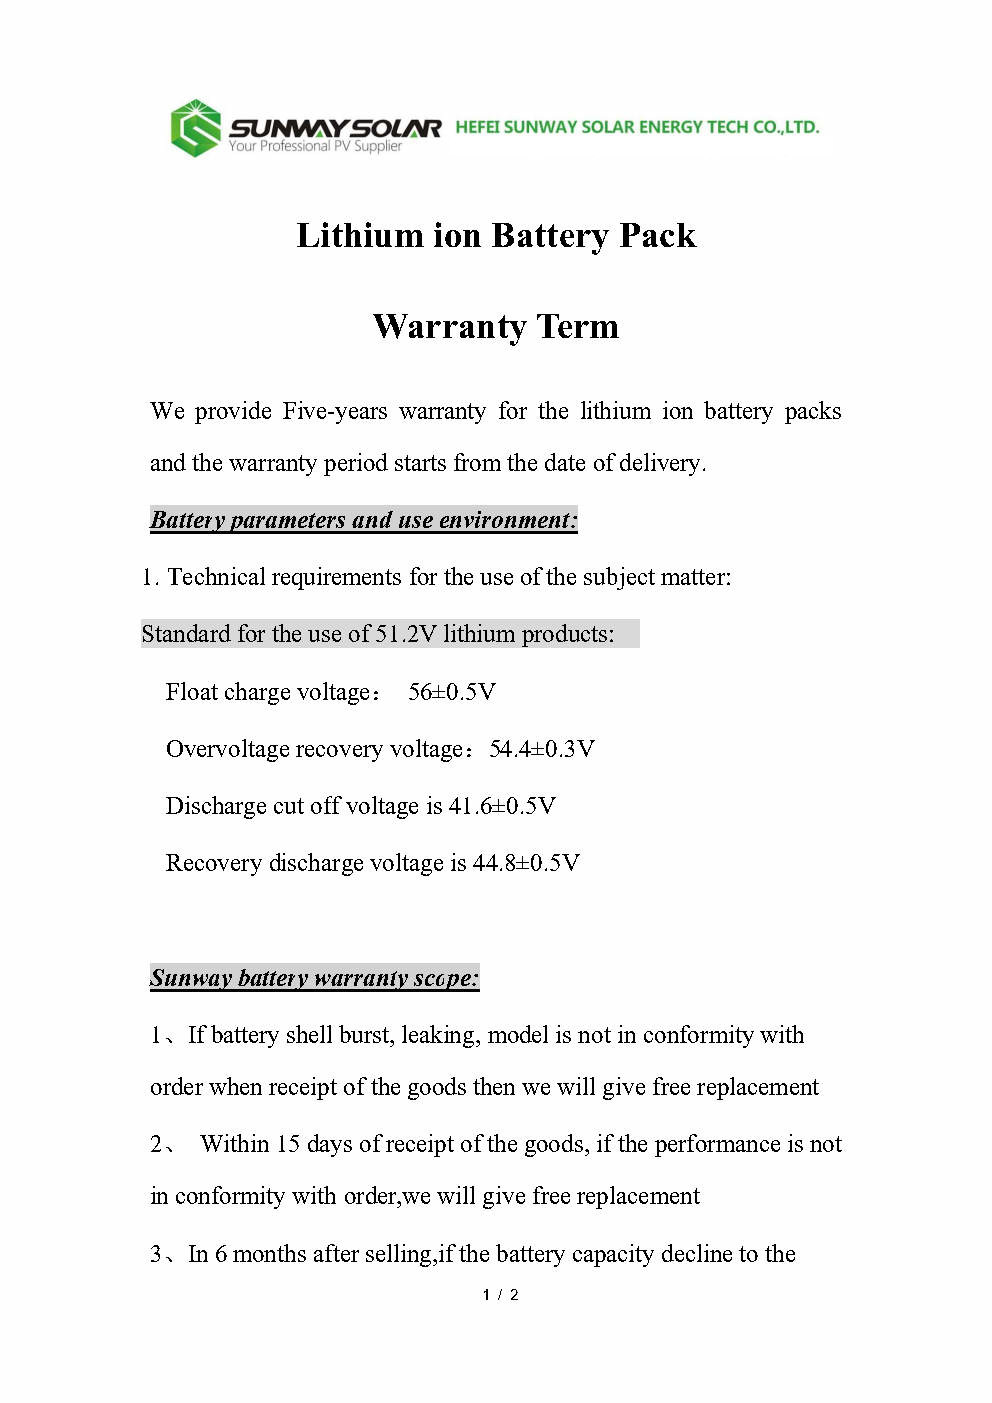 lithium battery warranty term